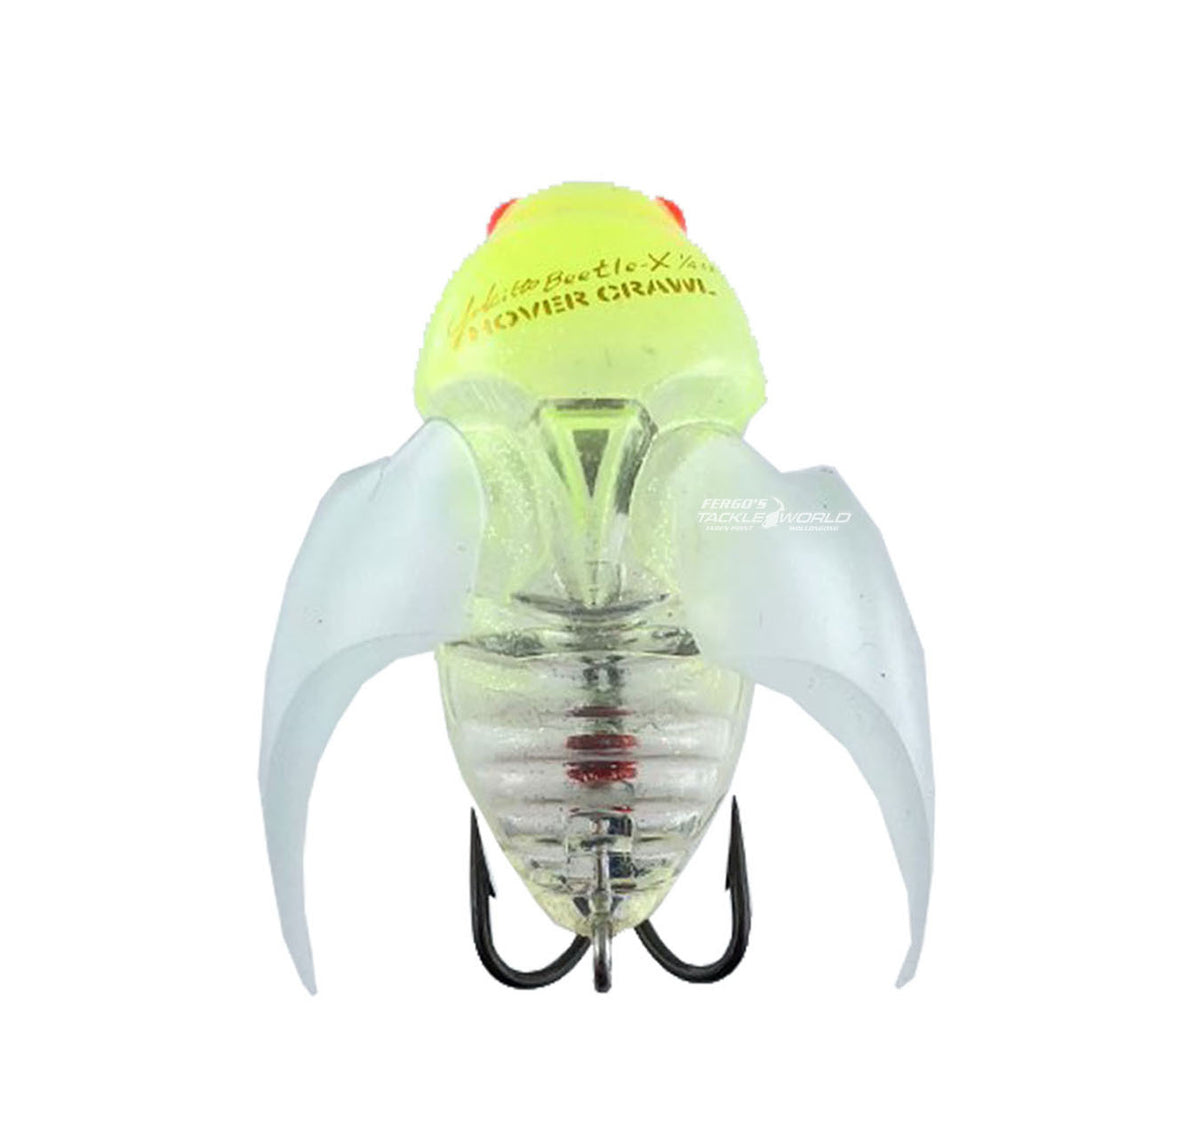 Megabass Beetle-X Hover Crawl Lures